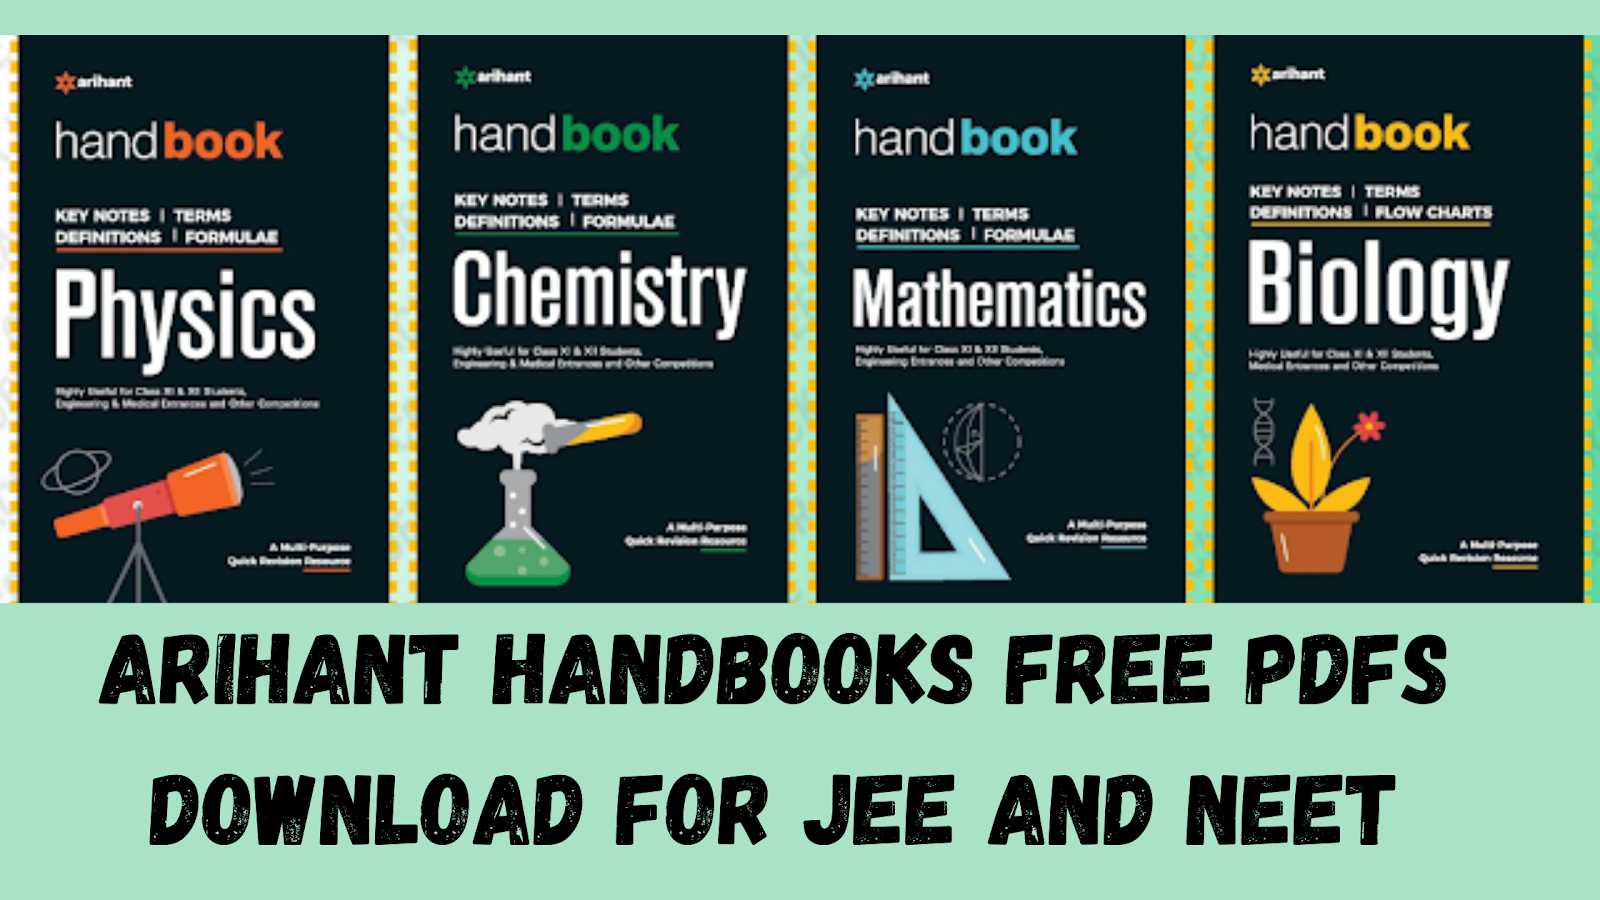 Pdf mathematics. Дизайн обложки книги Handbook. Razdelite for books. Cambridge 10 pdf Dowland. Panda sat Math pdf.